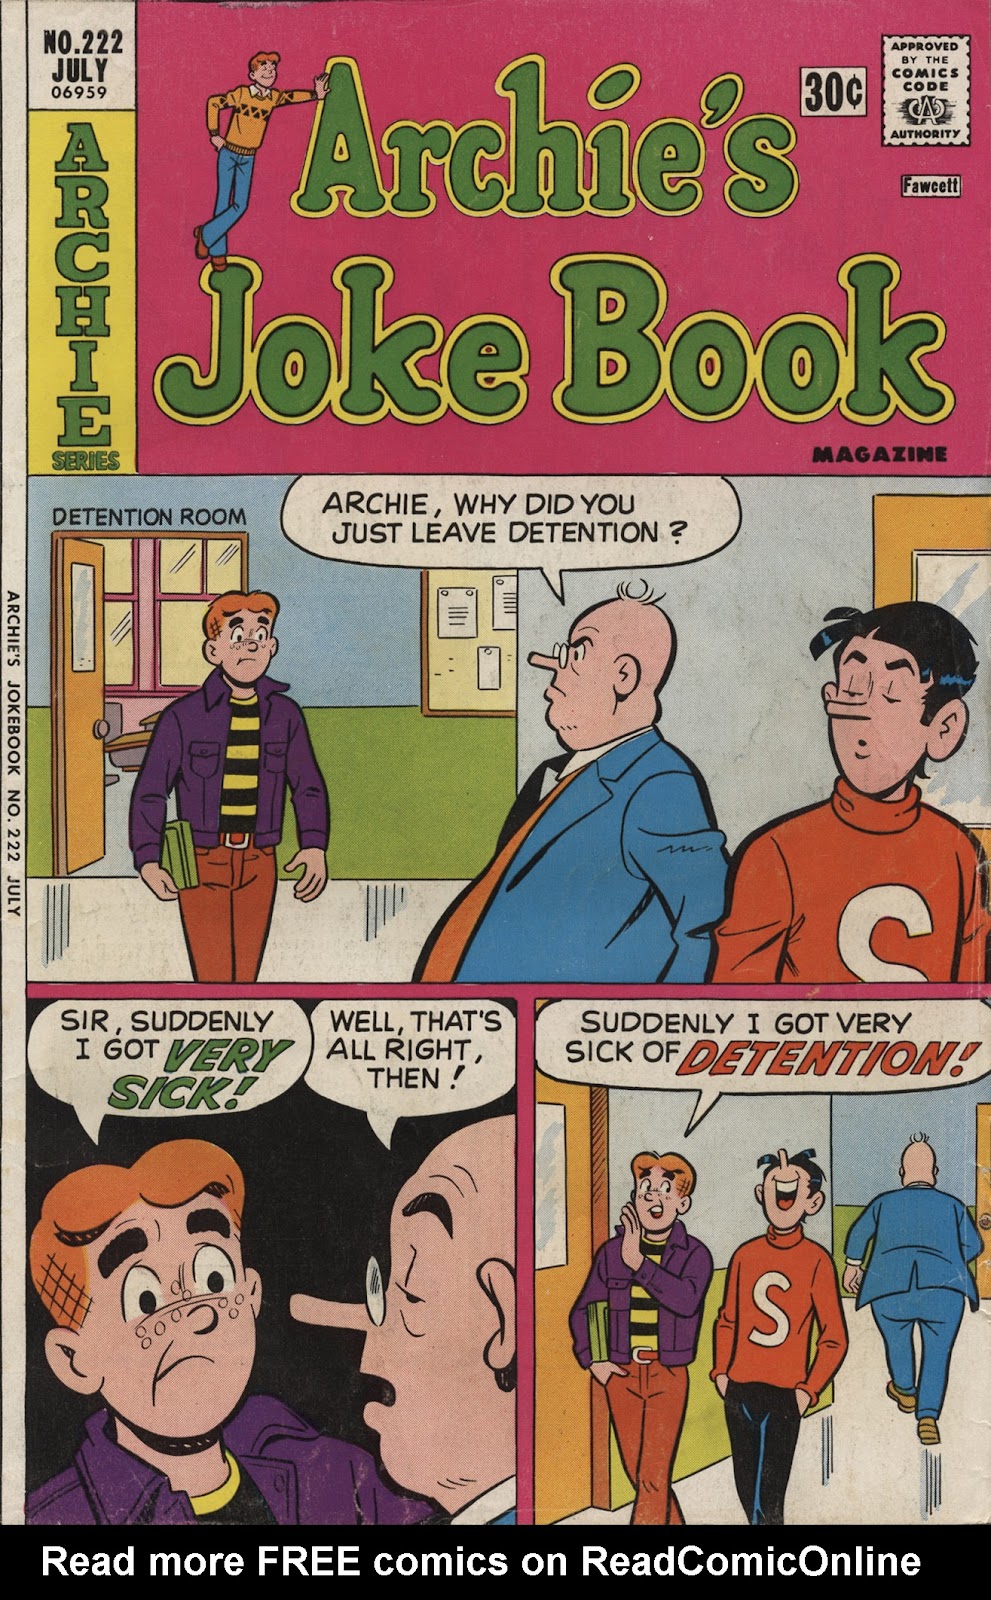 Archie's Joke Book Magazine issue 222 - Page 1